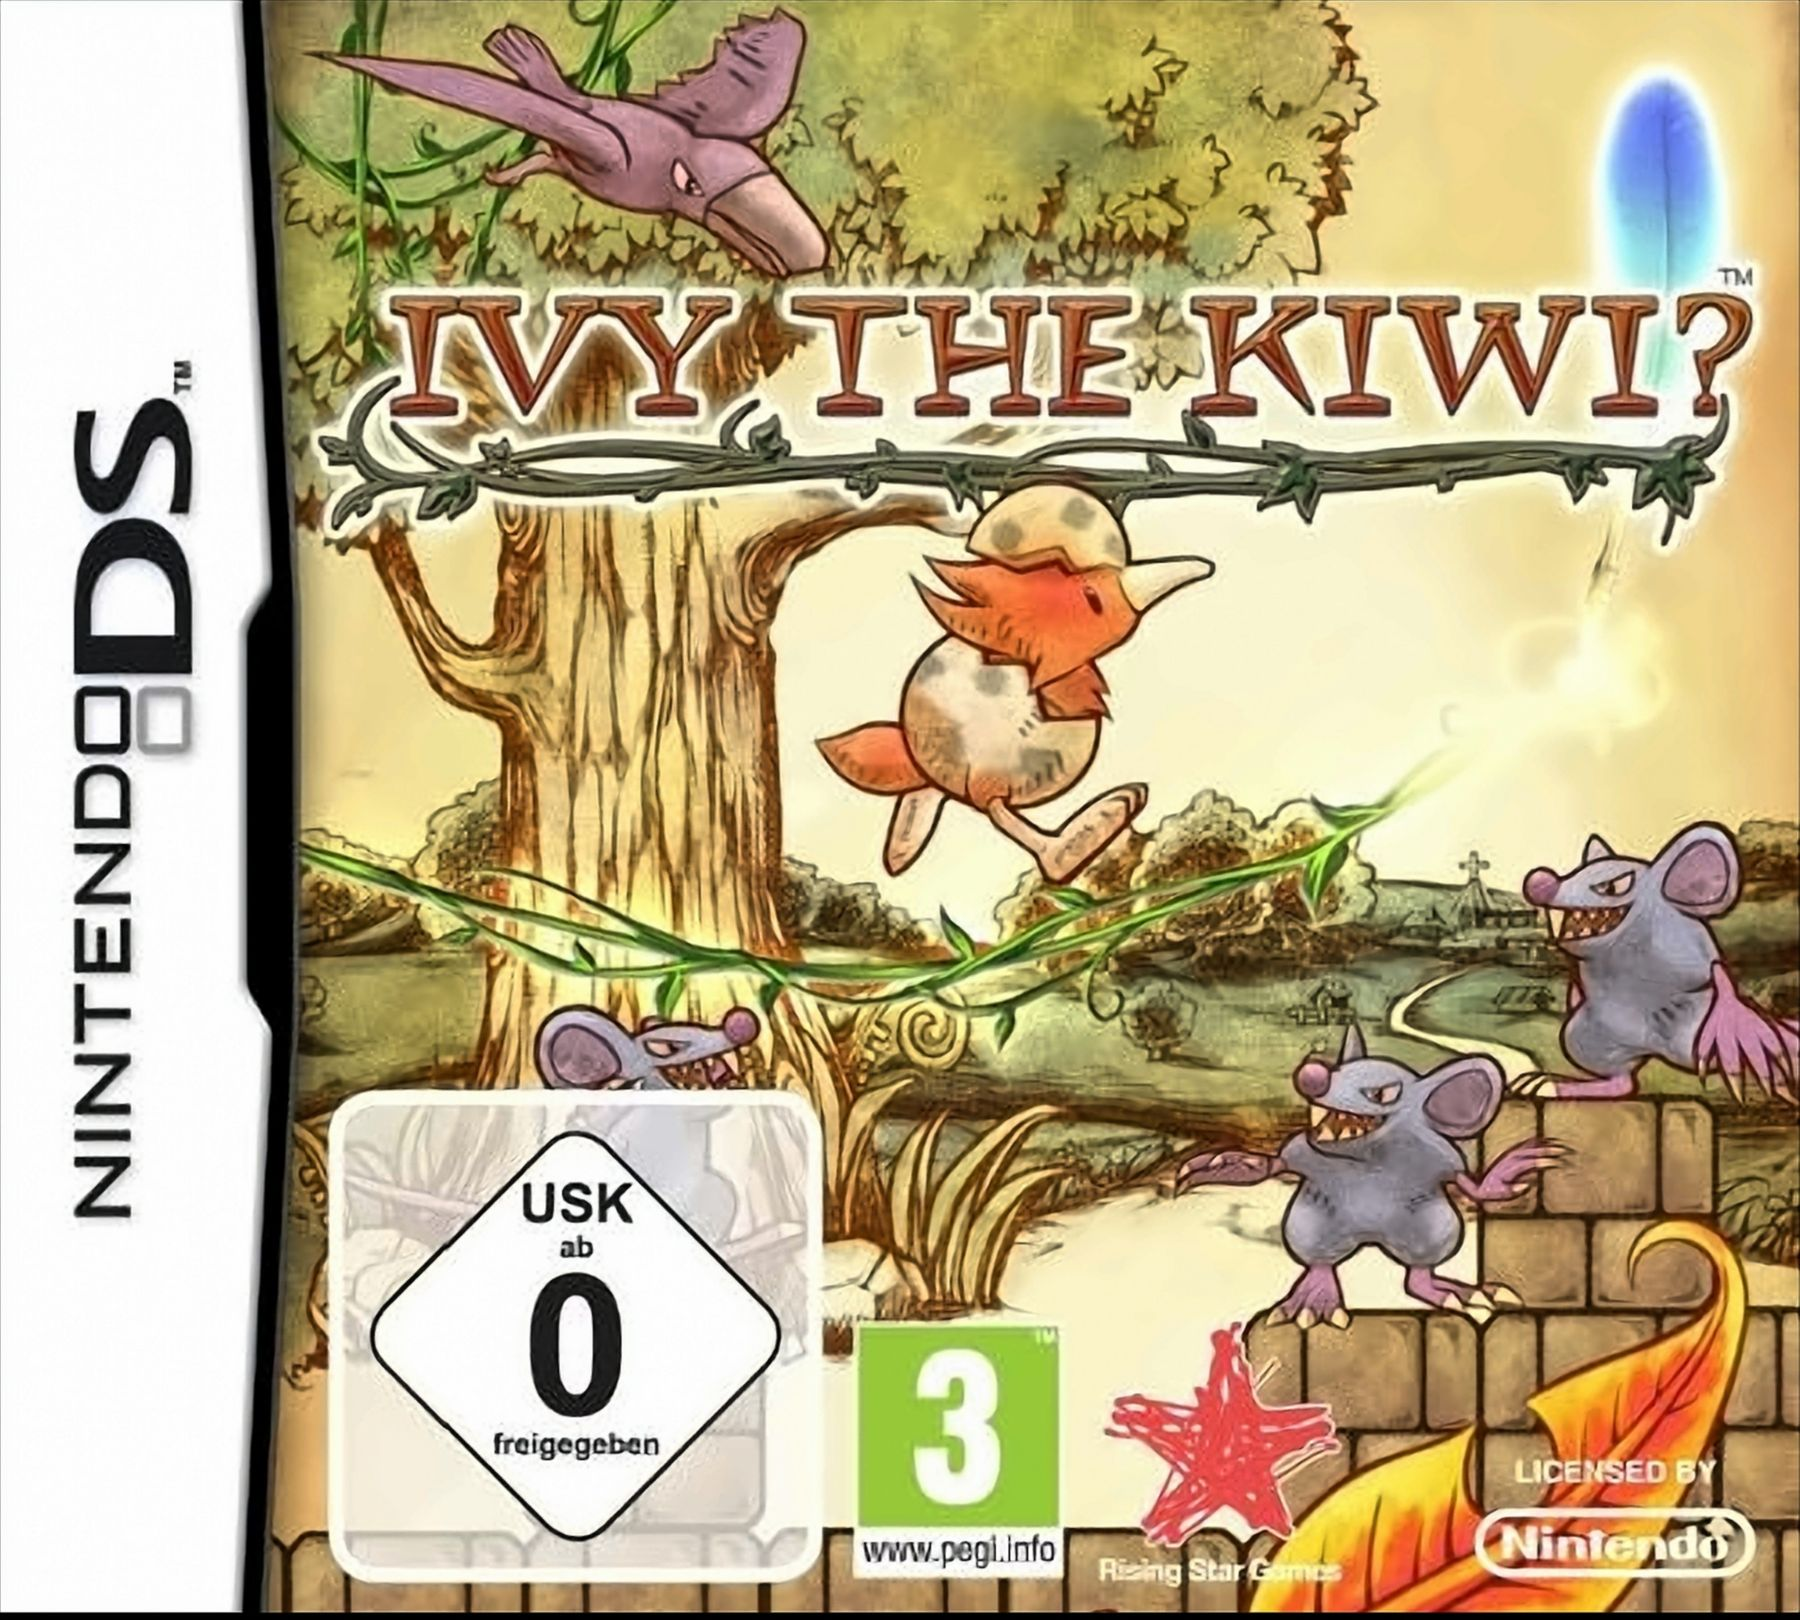 DS] [Nintendo Ivy The - Kiwi